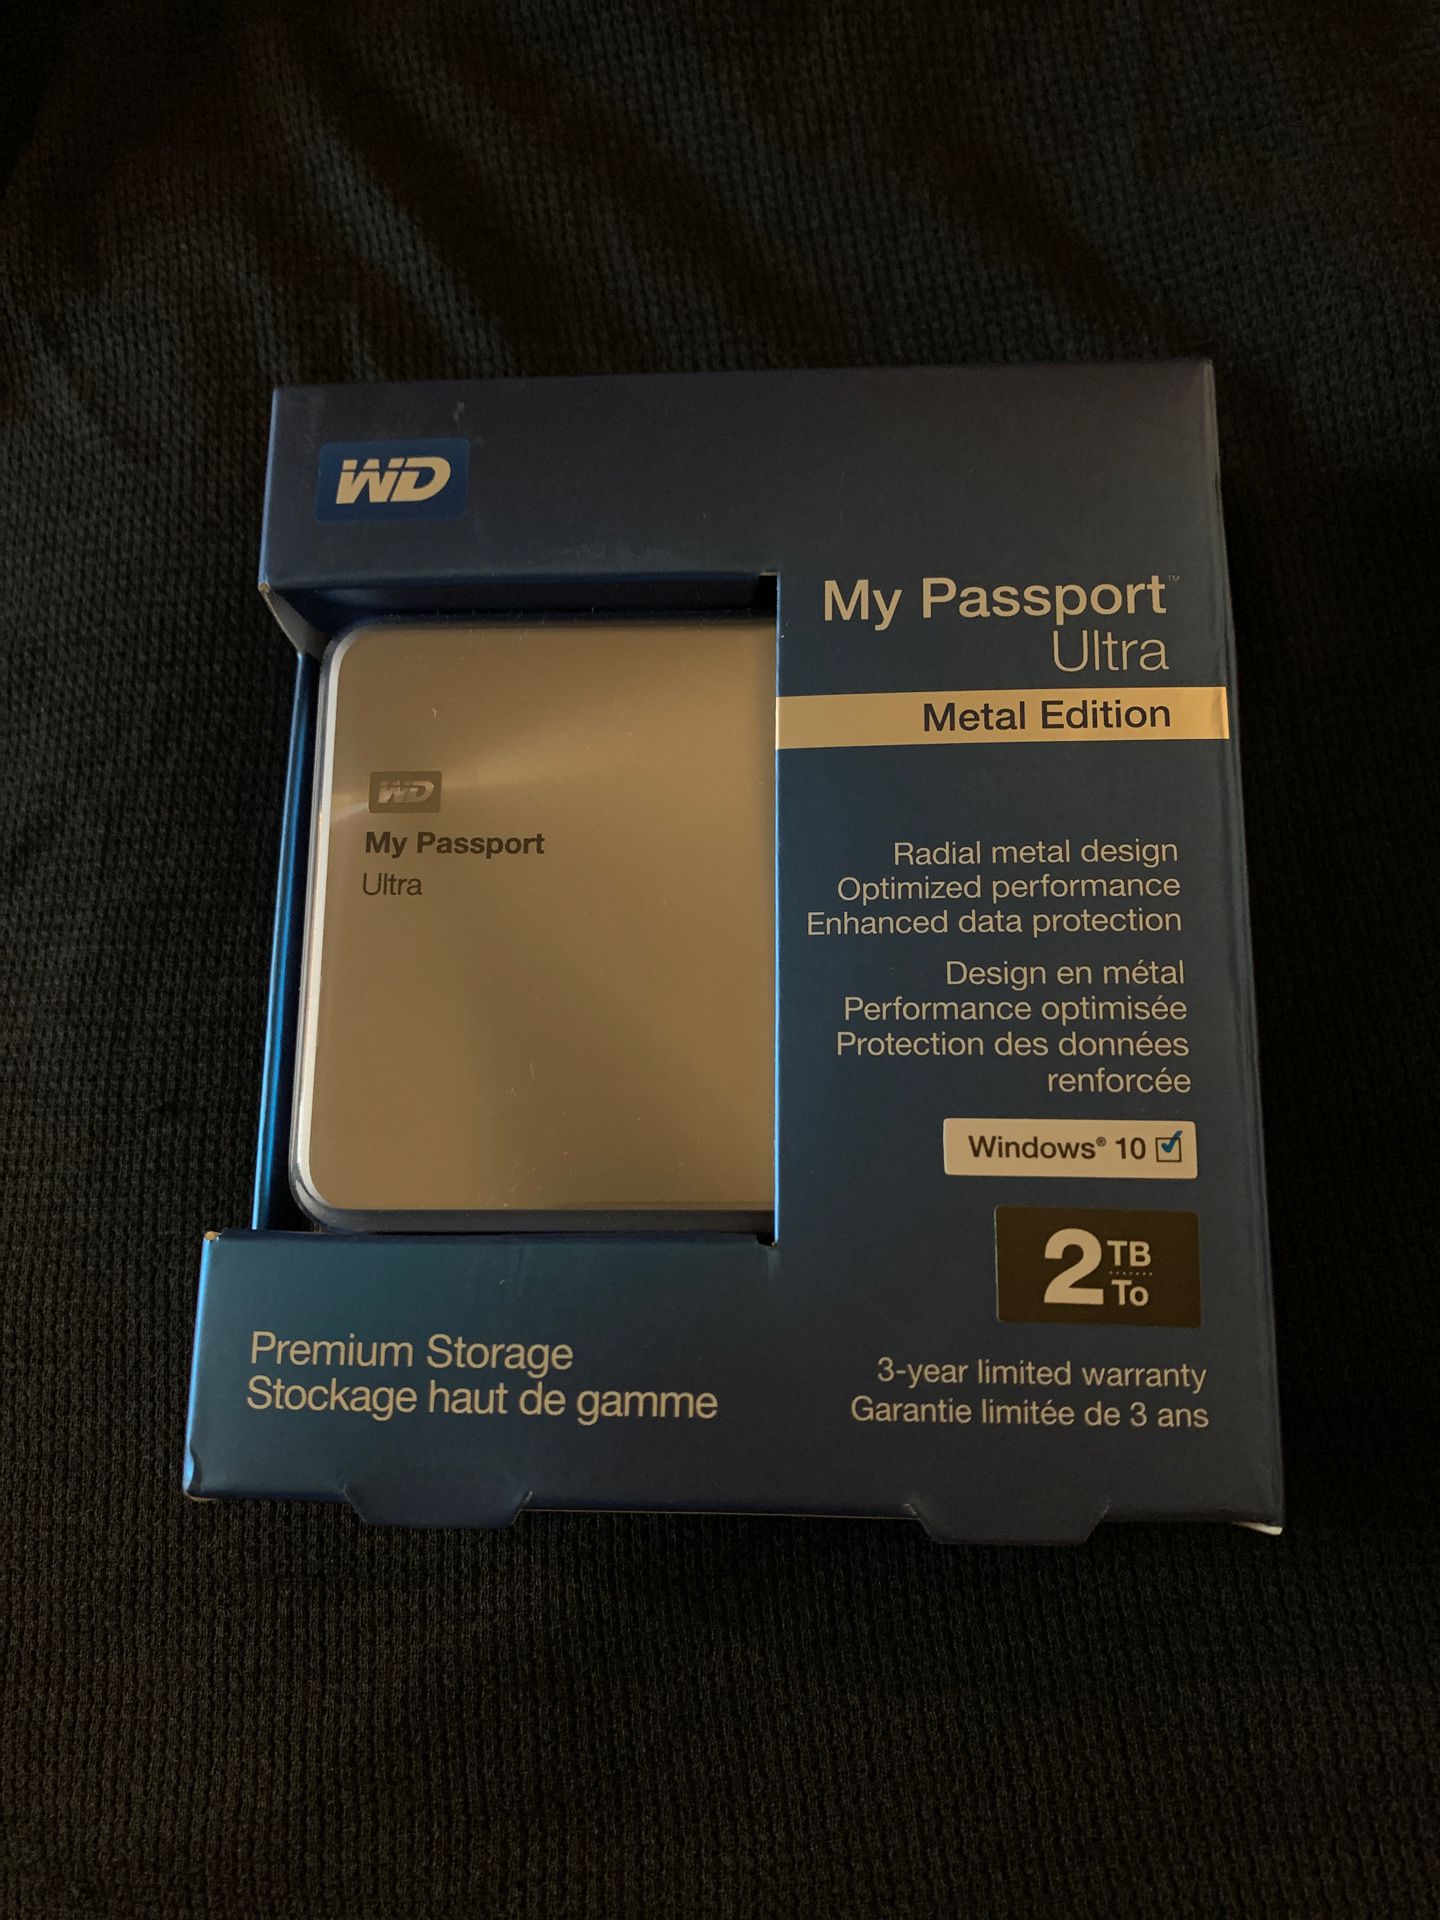 WD My Passport Ultra 2TB External Hard Drive